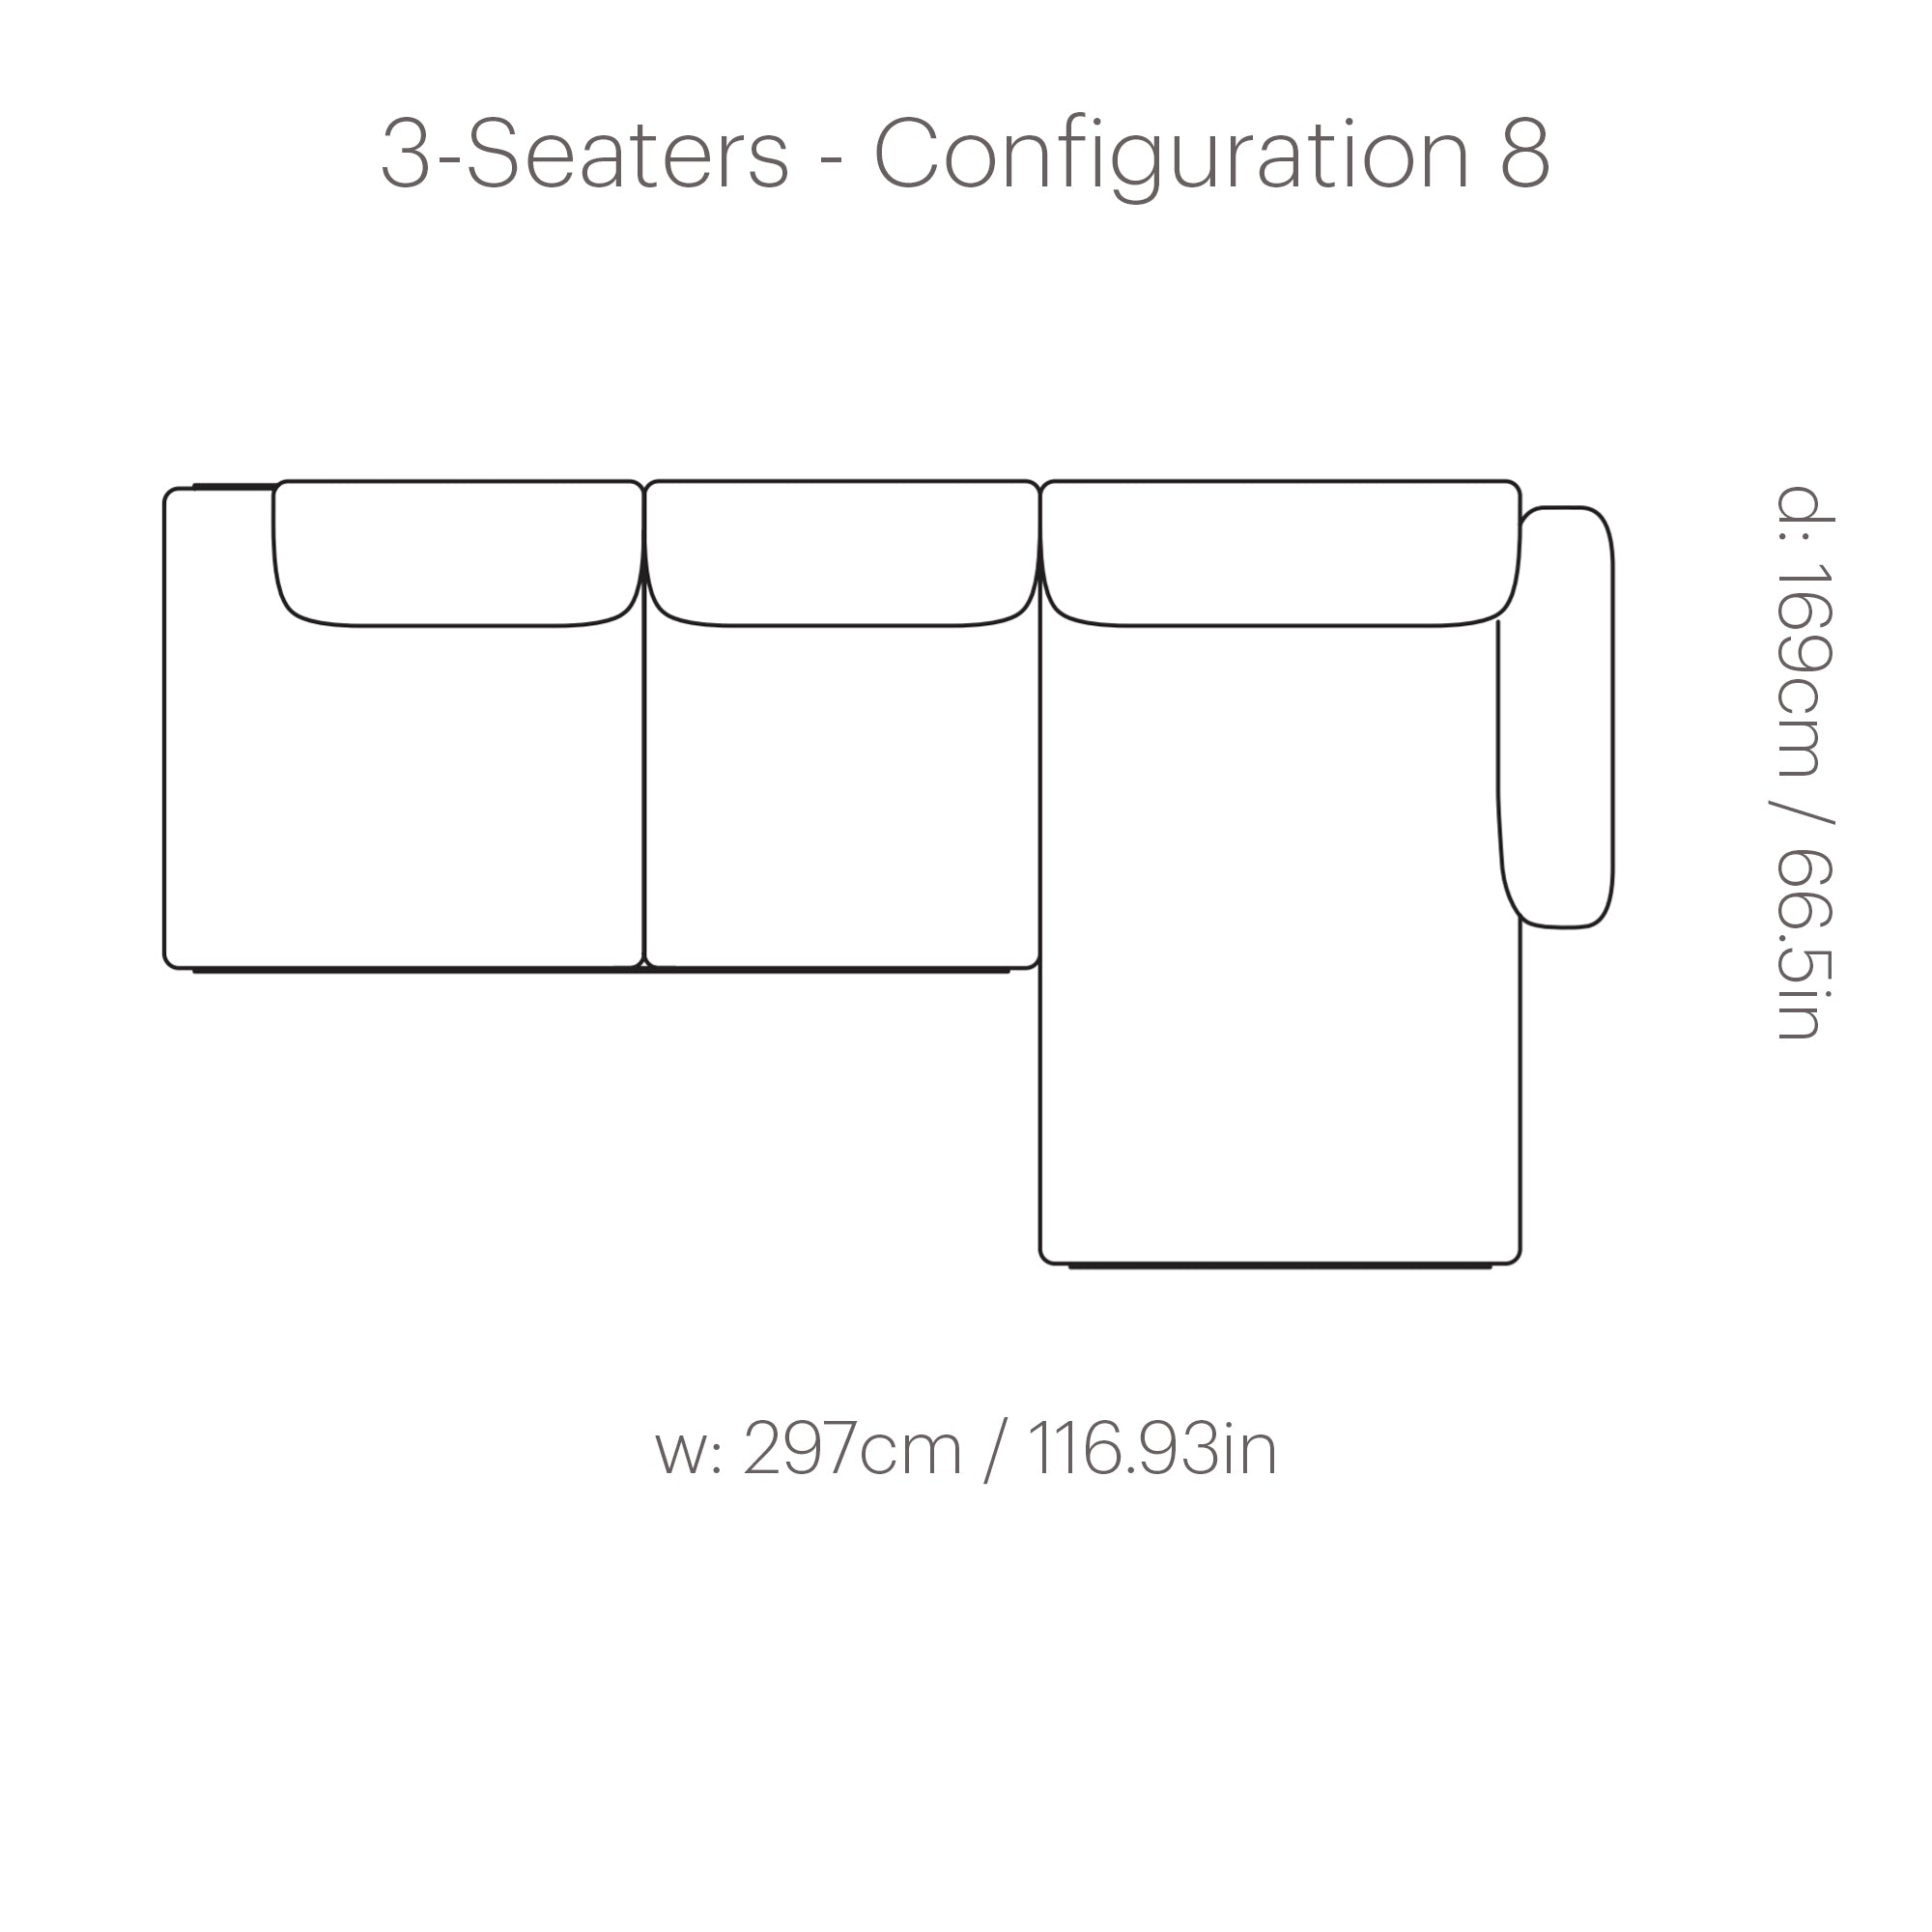 In Situ Modular Sofa: 3 Seater + Configuration 8